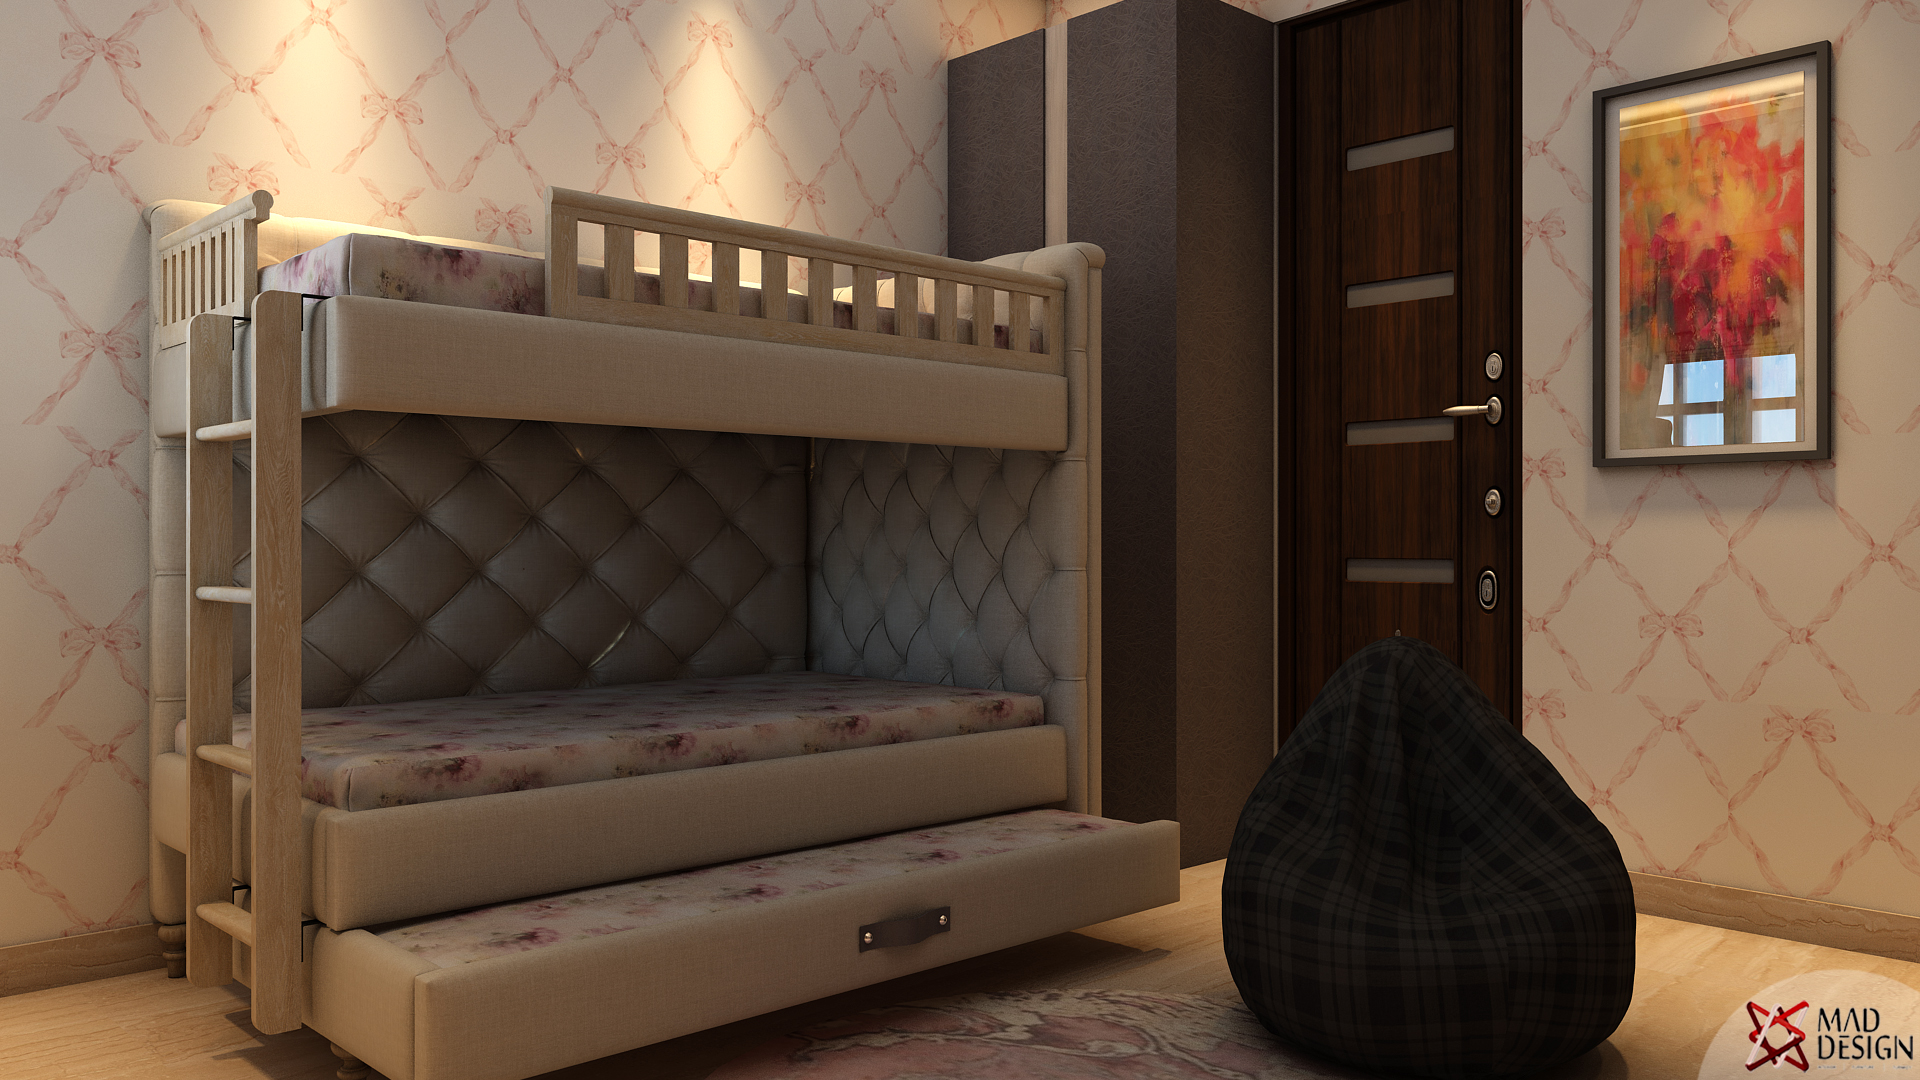 Kids Room Design With Bunk Bed